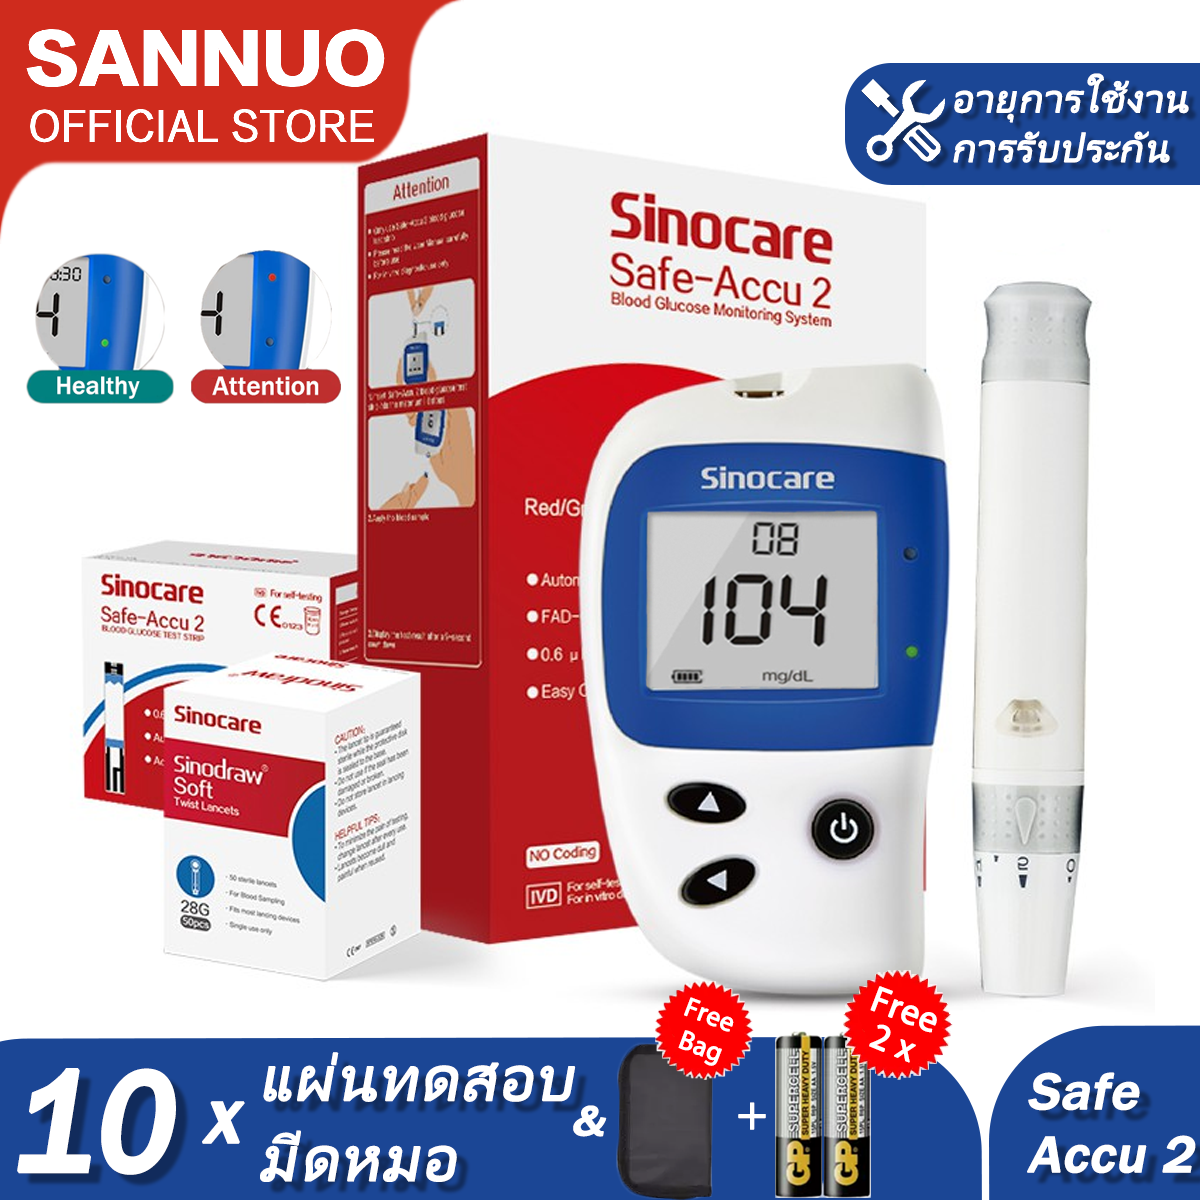 Sannuo Sinocare Safe Accu2 กลูโคสในเลือด Mester ชุดทดสอบเบาหวานน้ำตาลกลูโคสในเลือดพร้อมแถบทดสอบ 10 ชิ้นและมีดหมอแบบไม่เจ็บปวด 10 ชิ้น